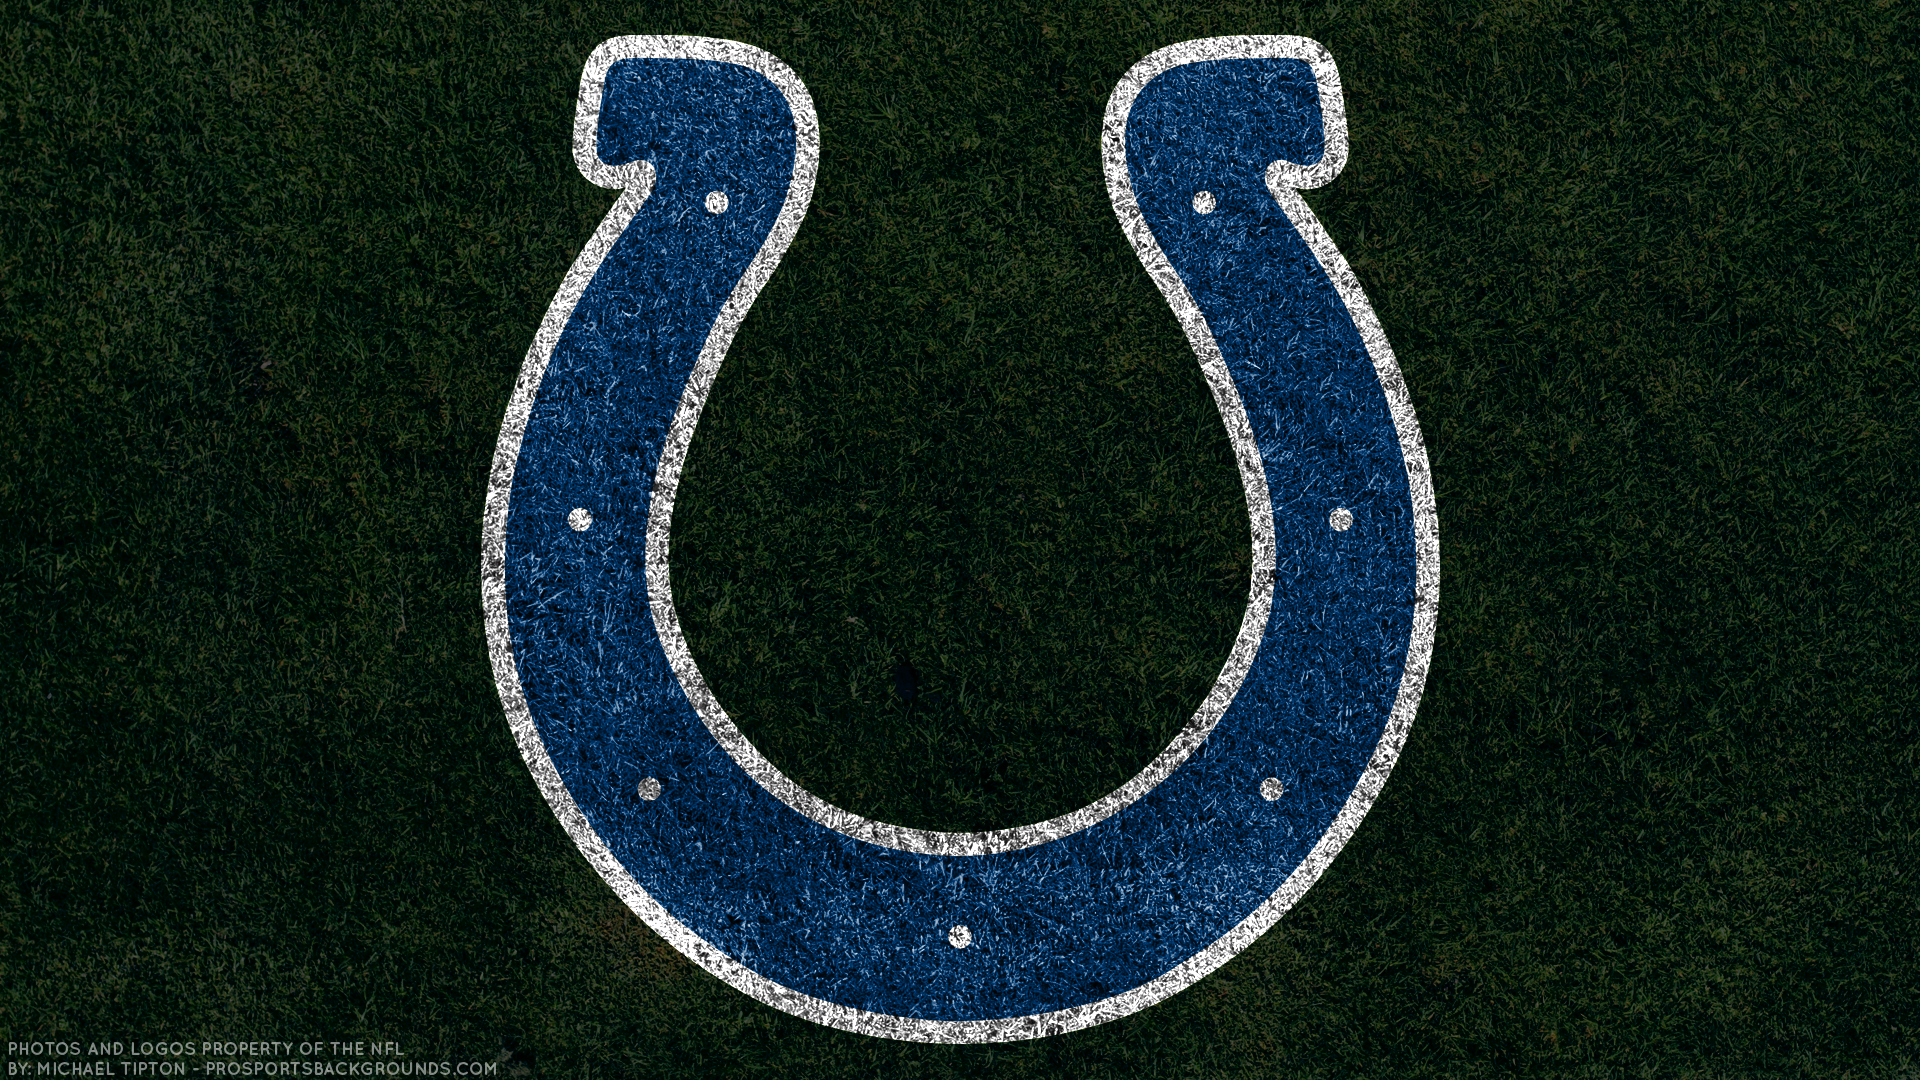 Indianapolis Colts Wallpaper Image Group